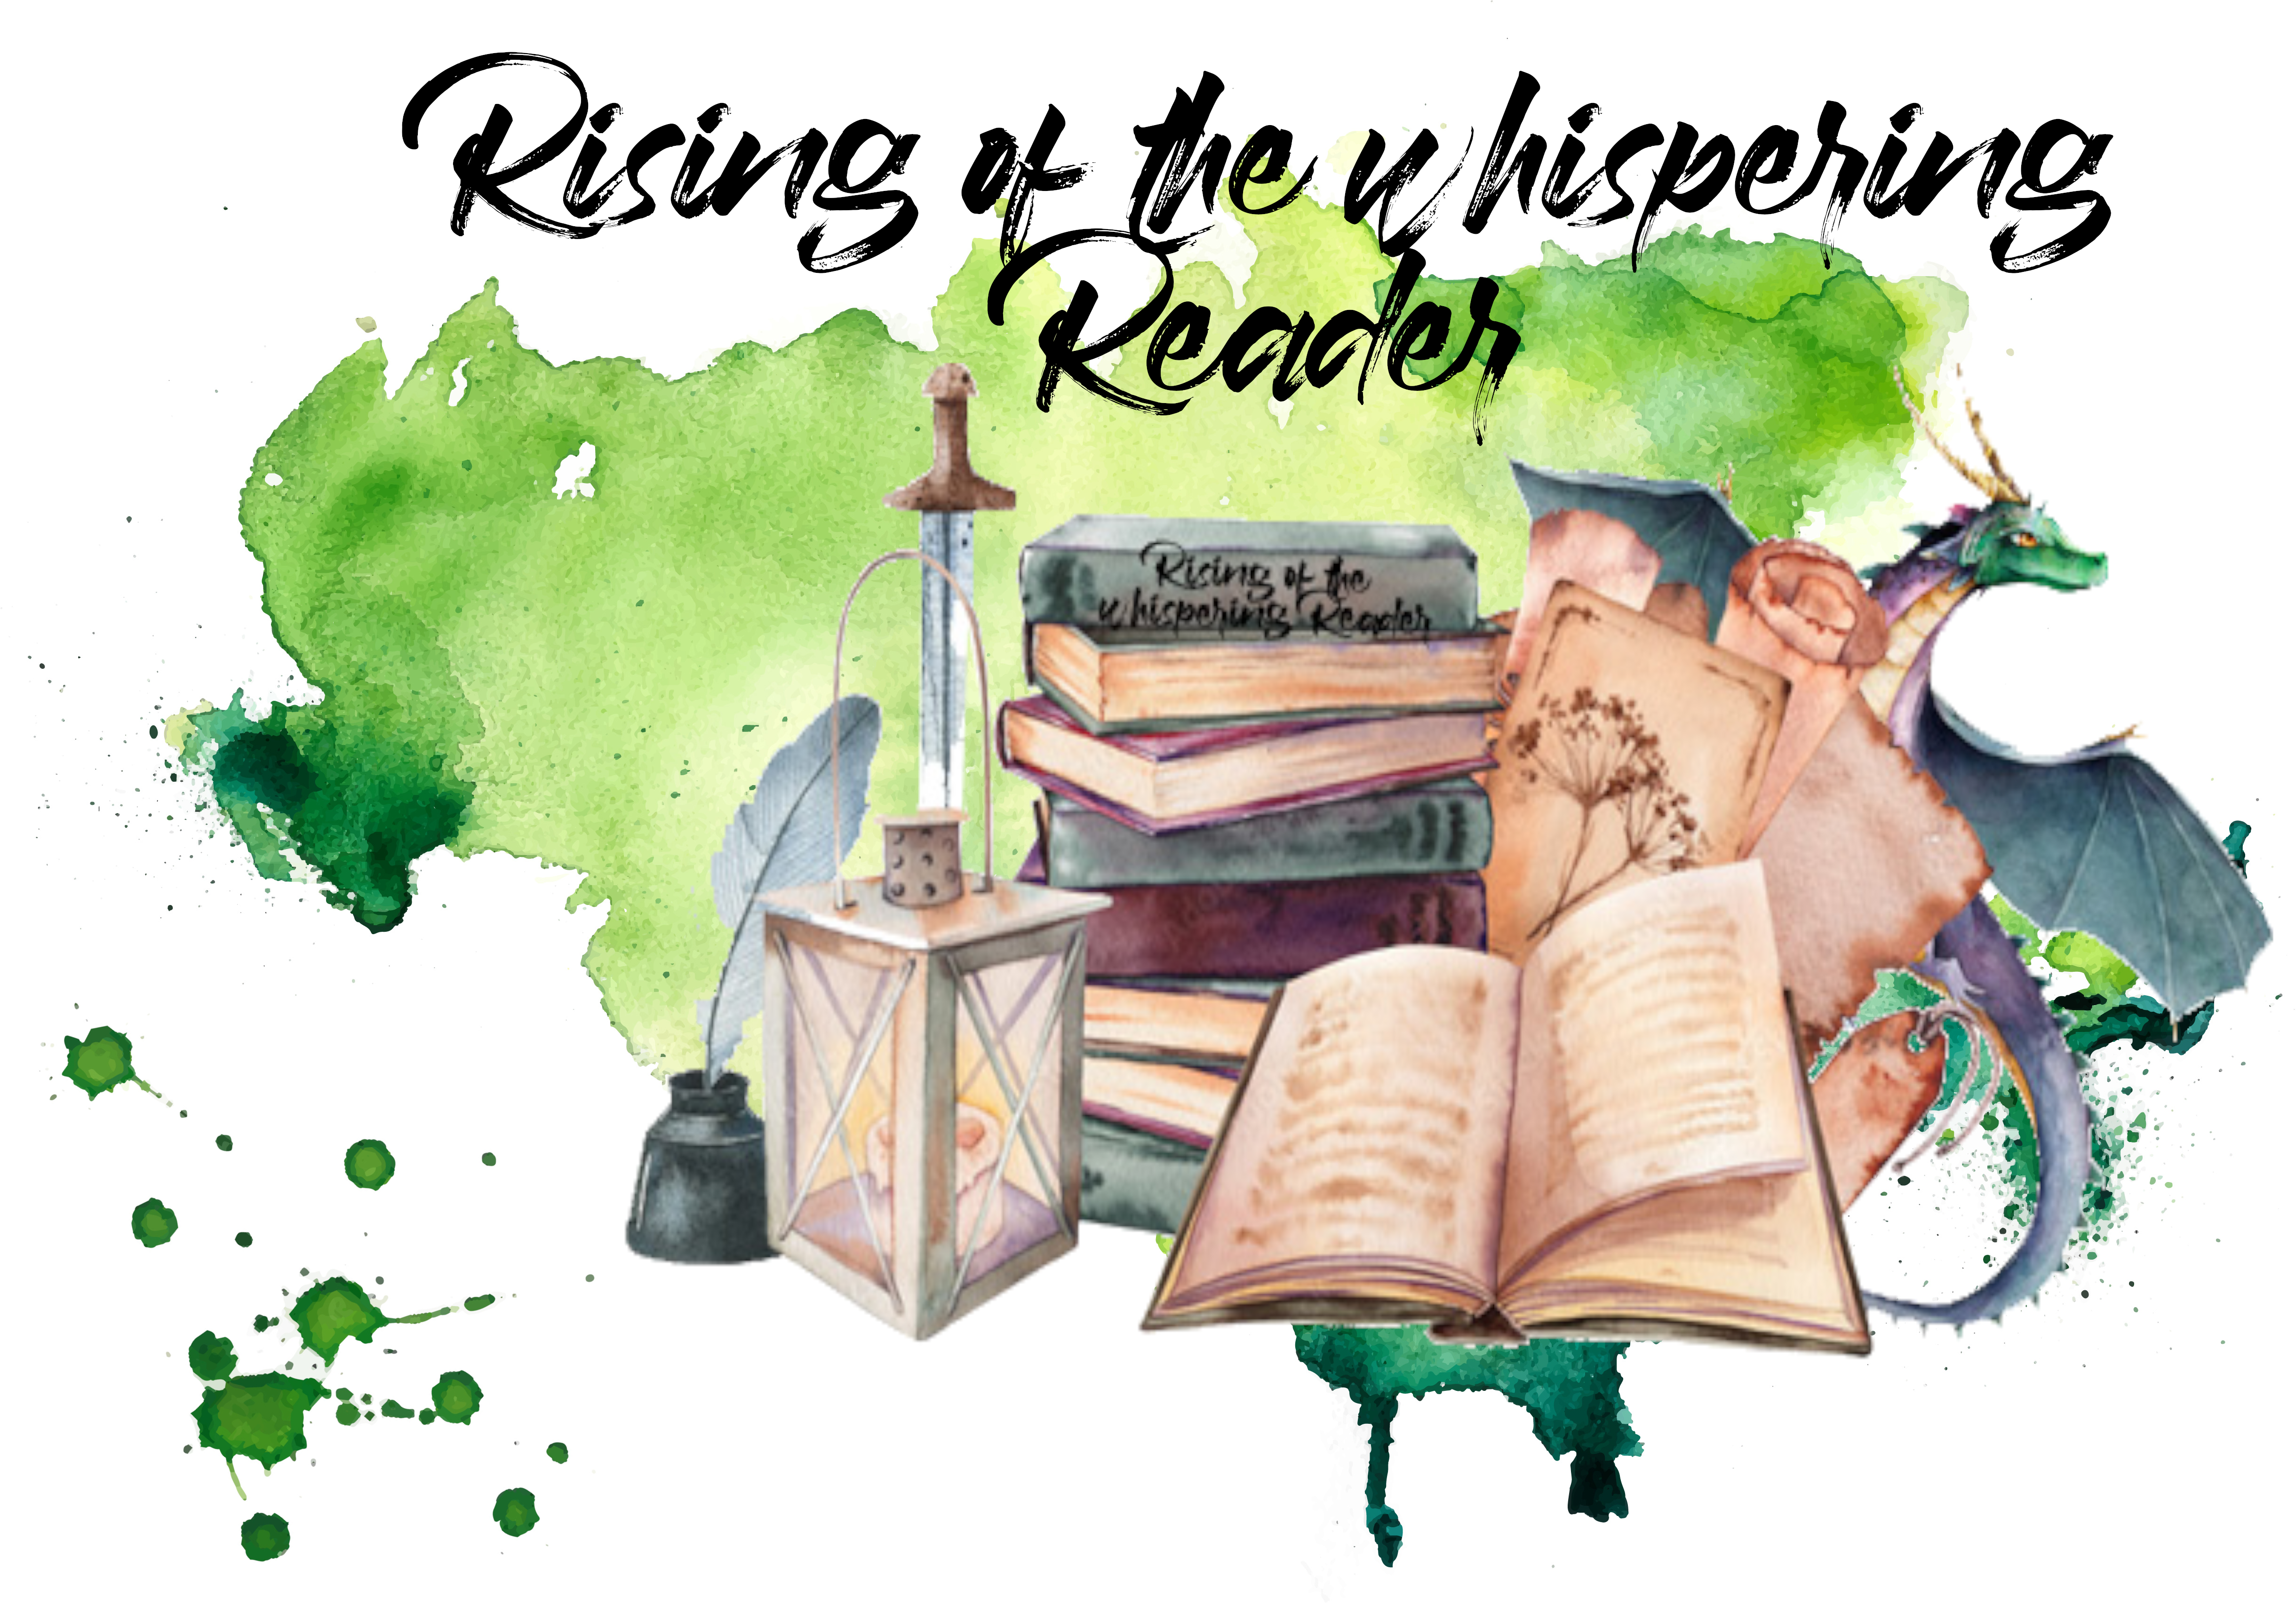 Rising of the whispering Reader – Aufgaben Mai